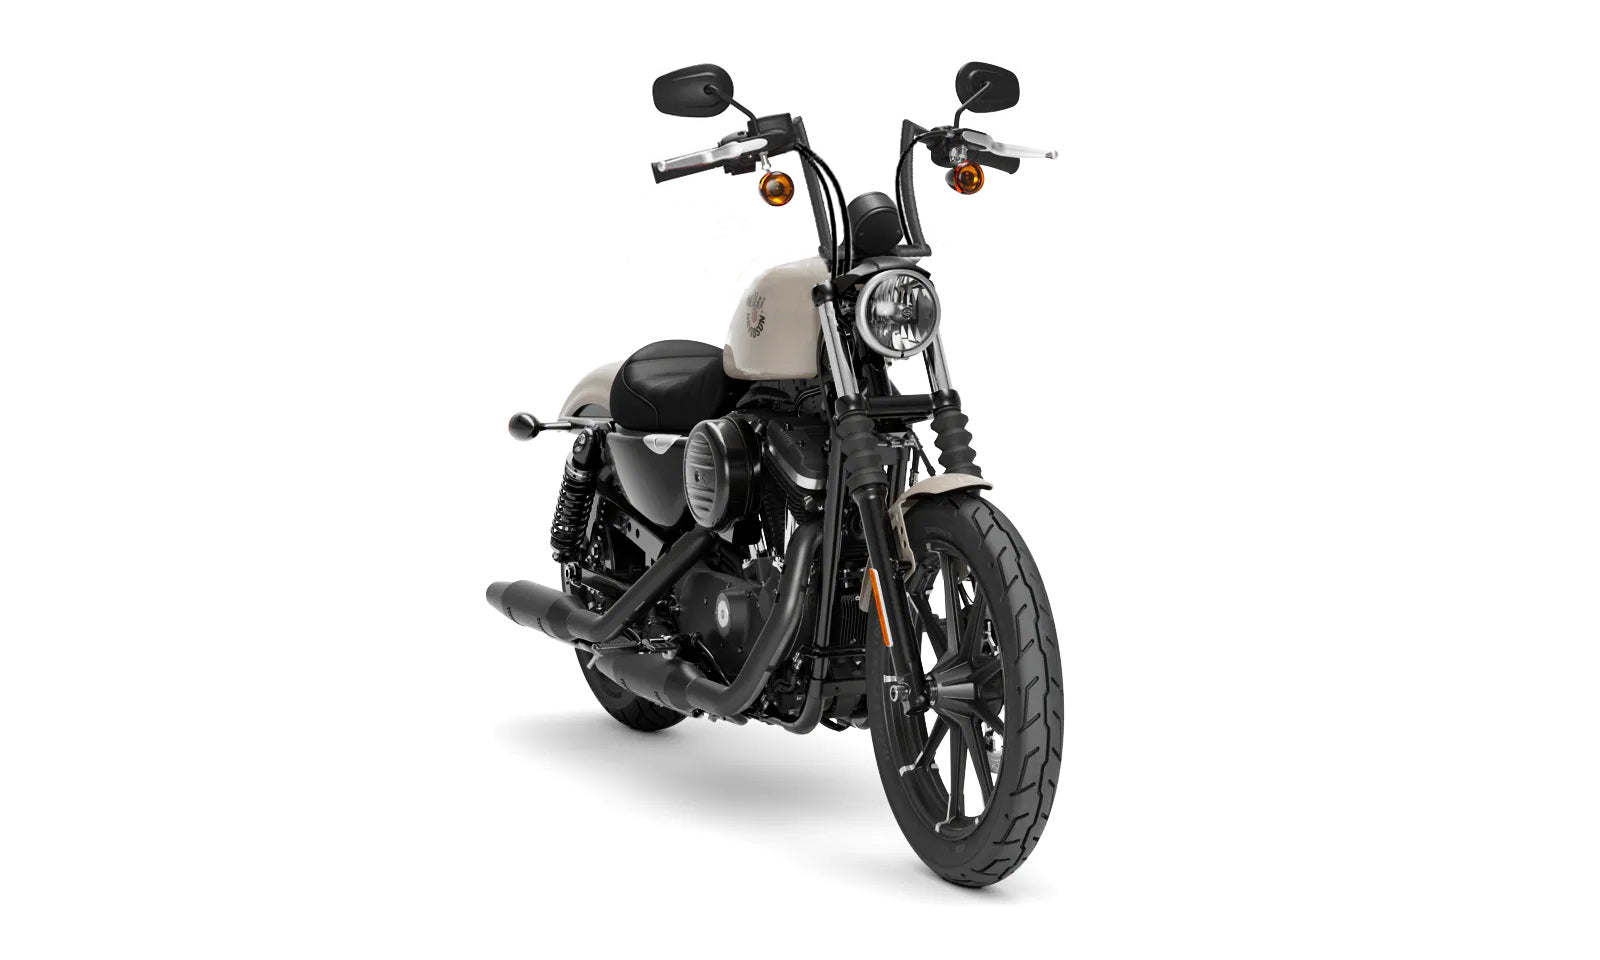 Viking Iron Born 9" Handlebar for Harley Sportster 883 Iron XL883N Matte Black Bag on Bike View @expand